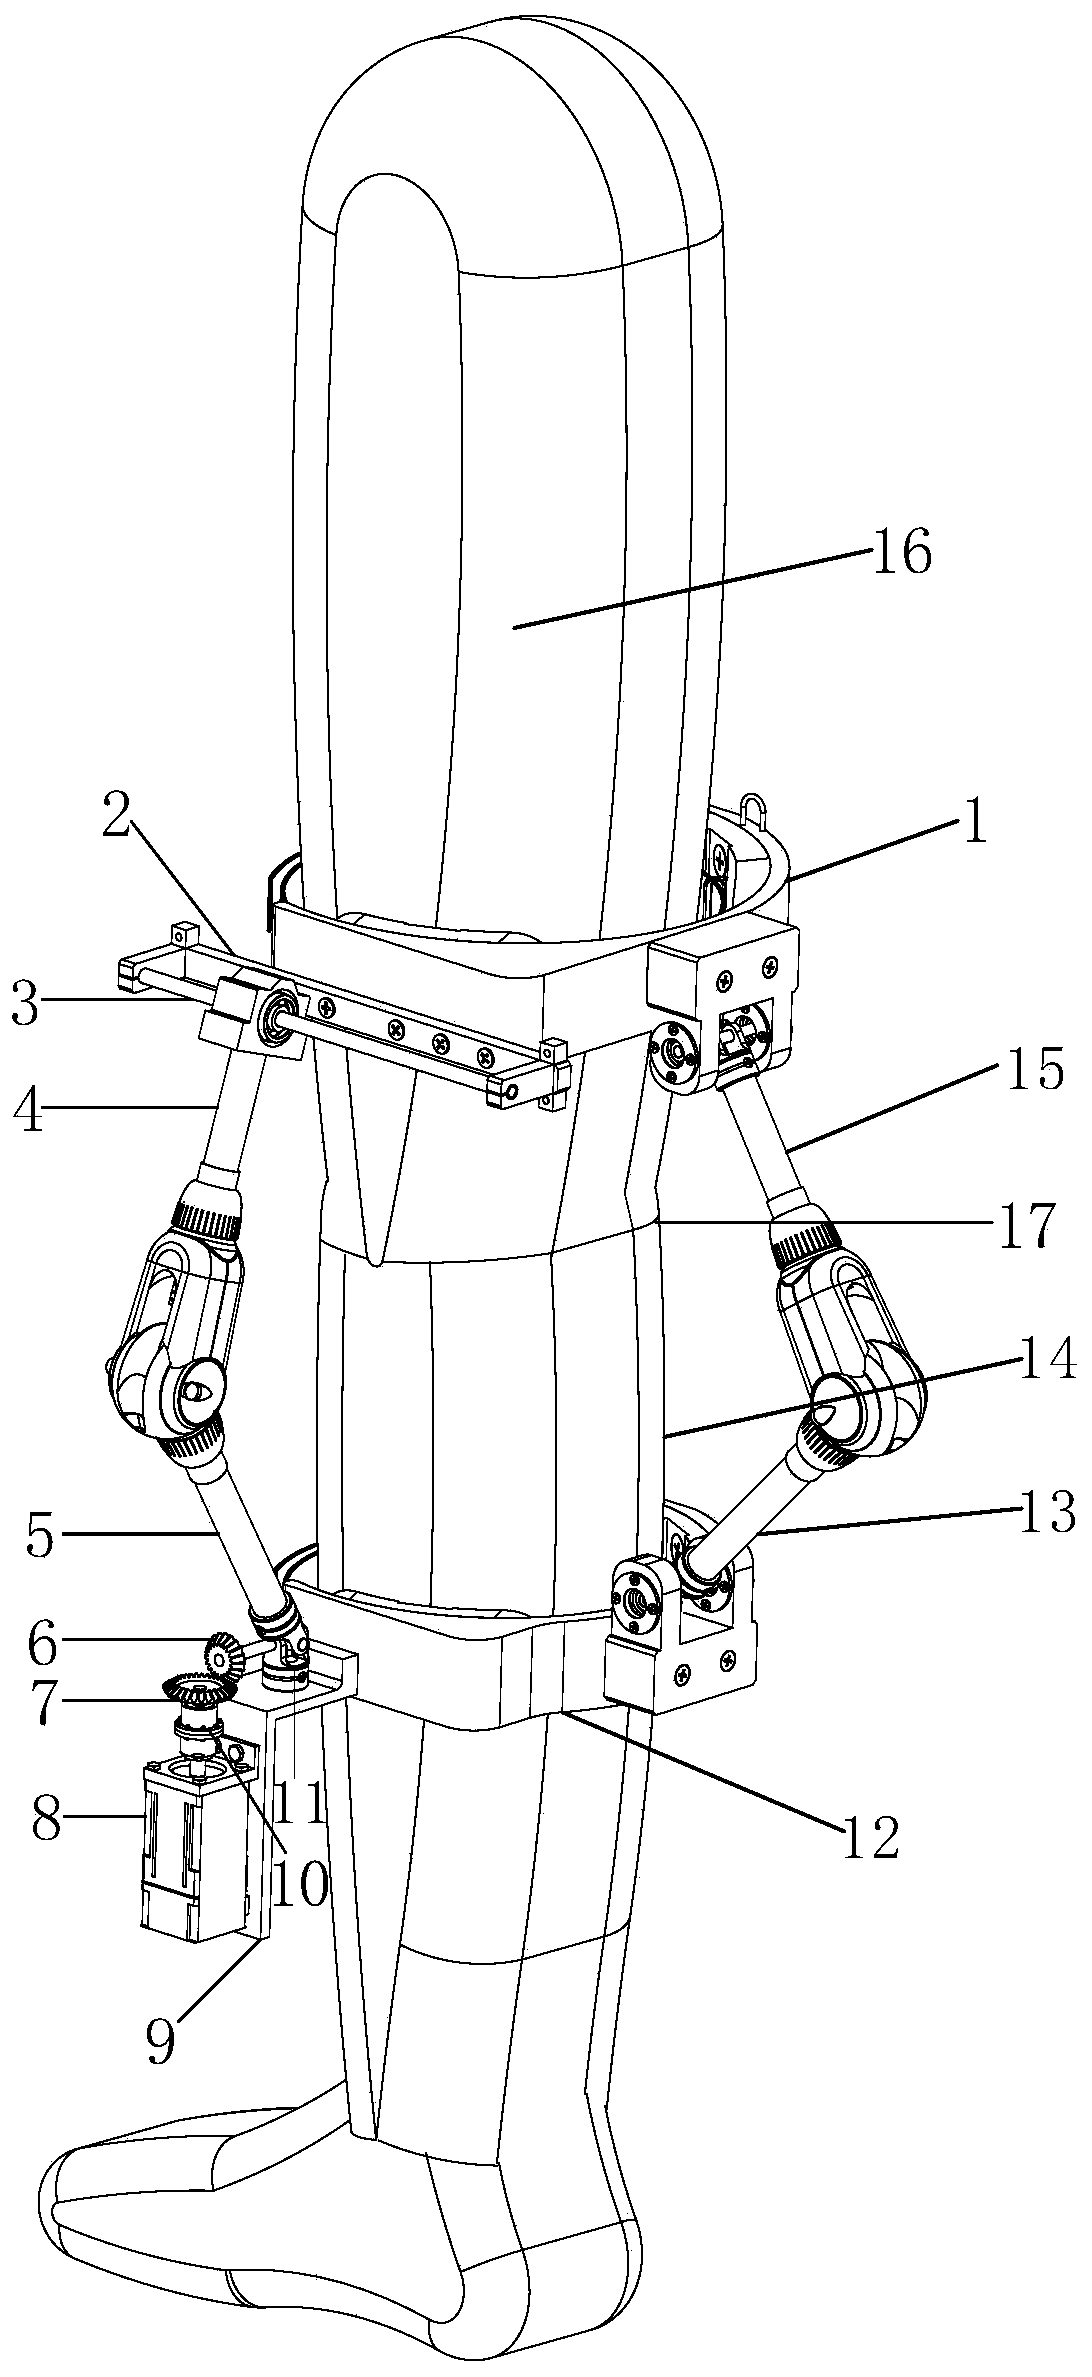 Human-computer fusion knee joint rehabilitation robot